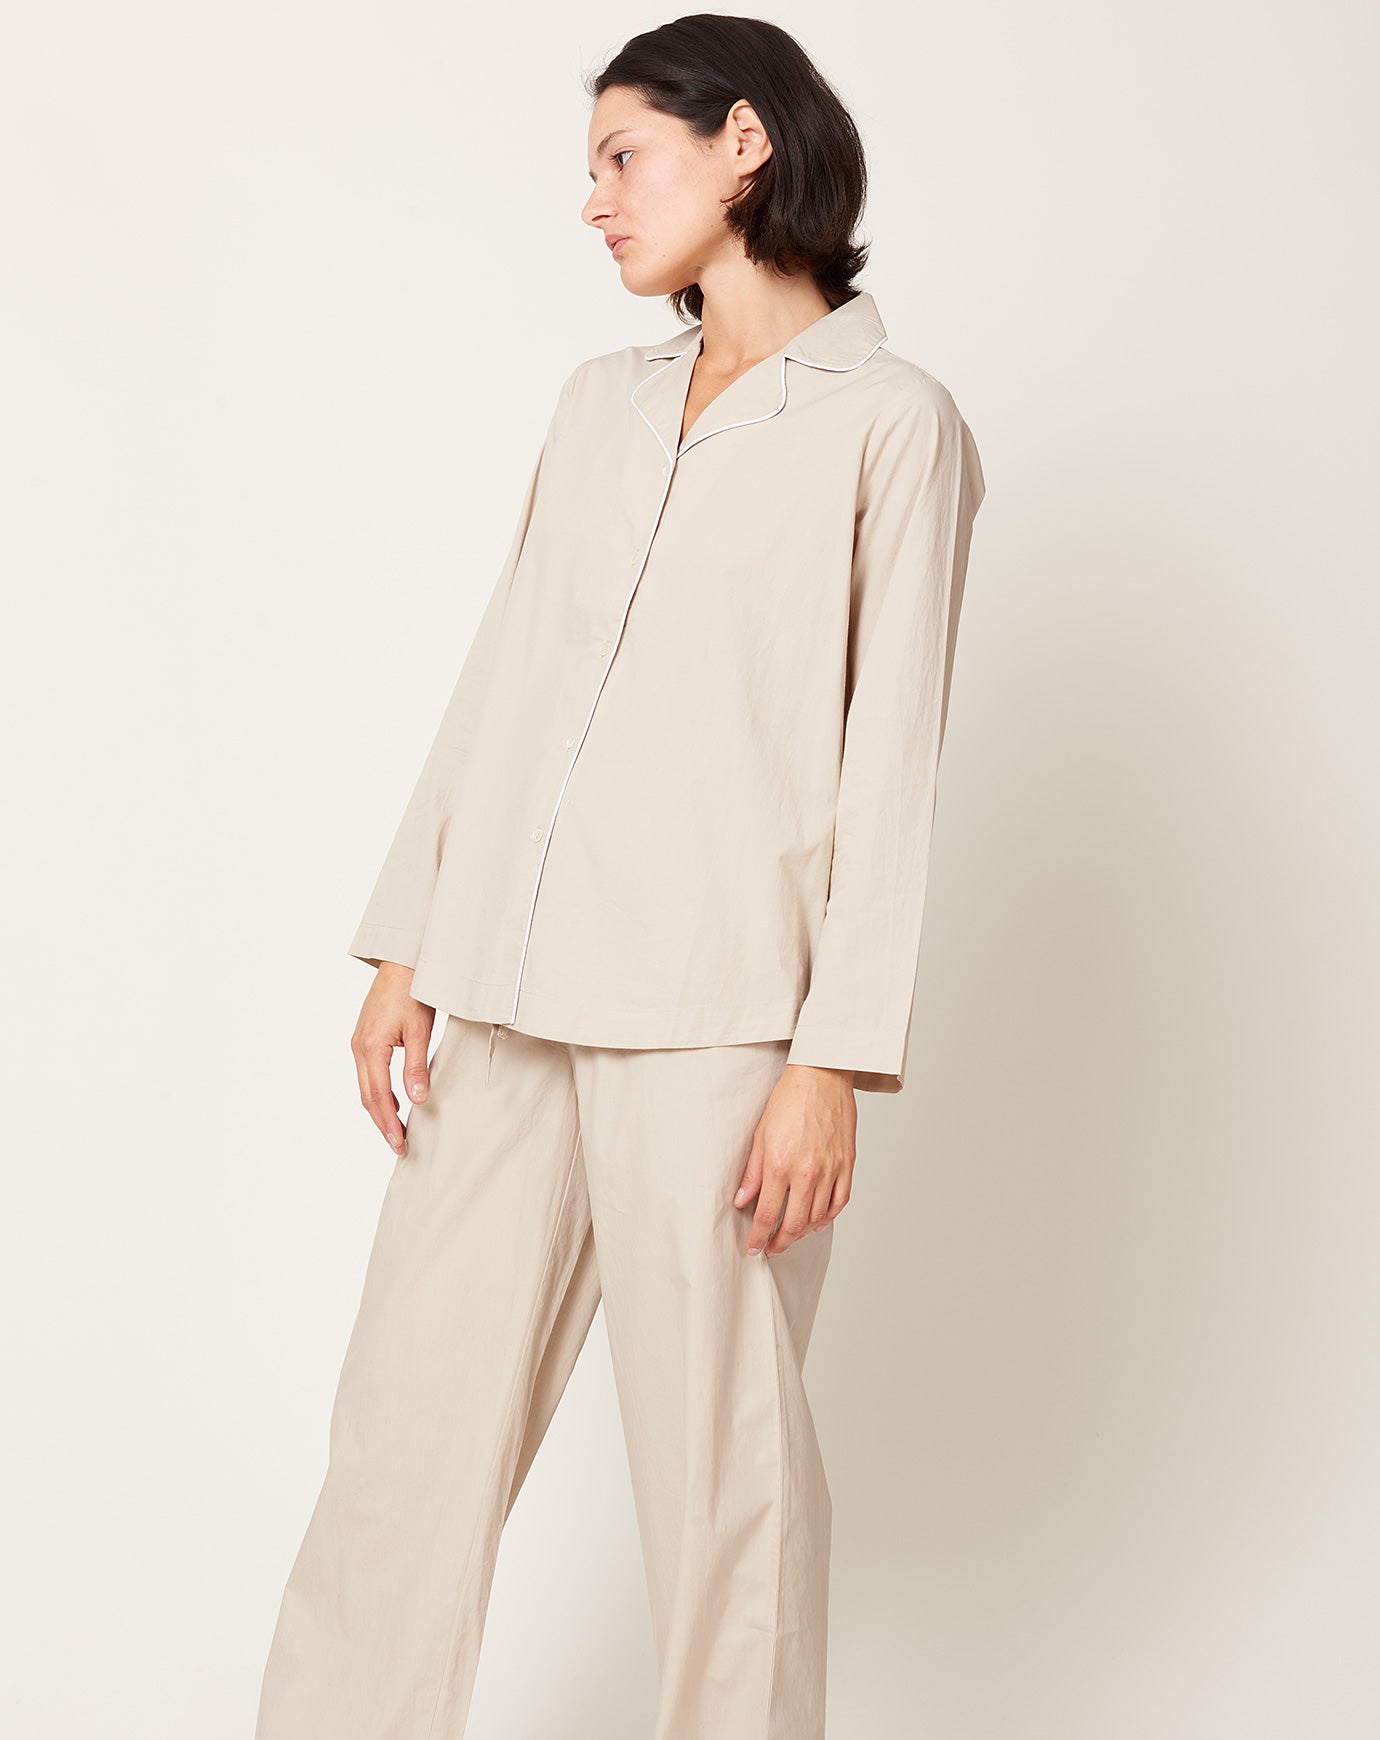 Skall Studio Pyjamas Shirt in Light Grey